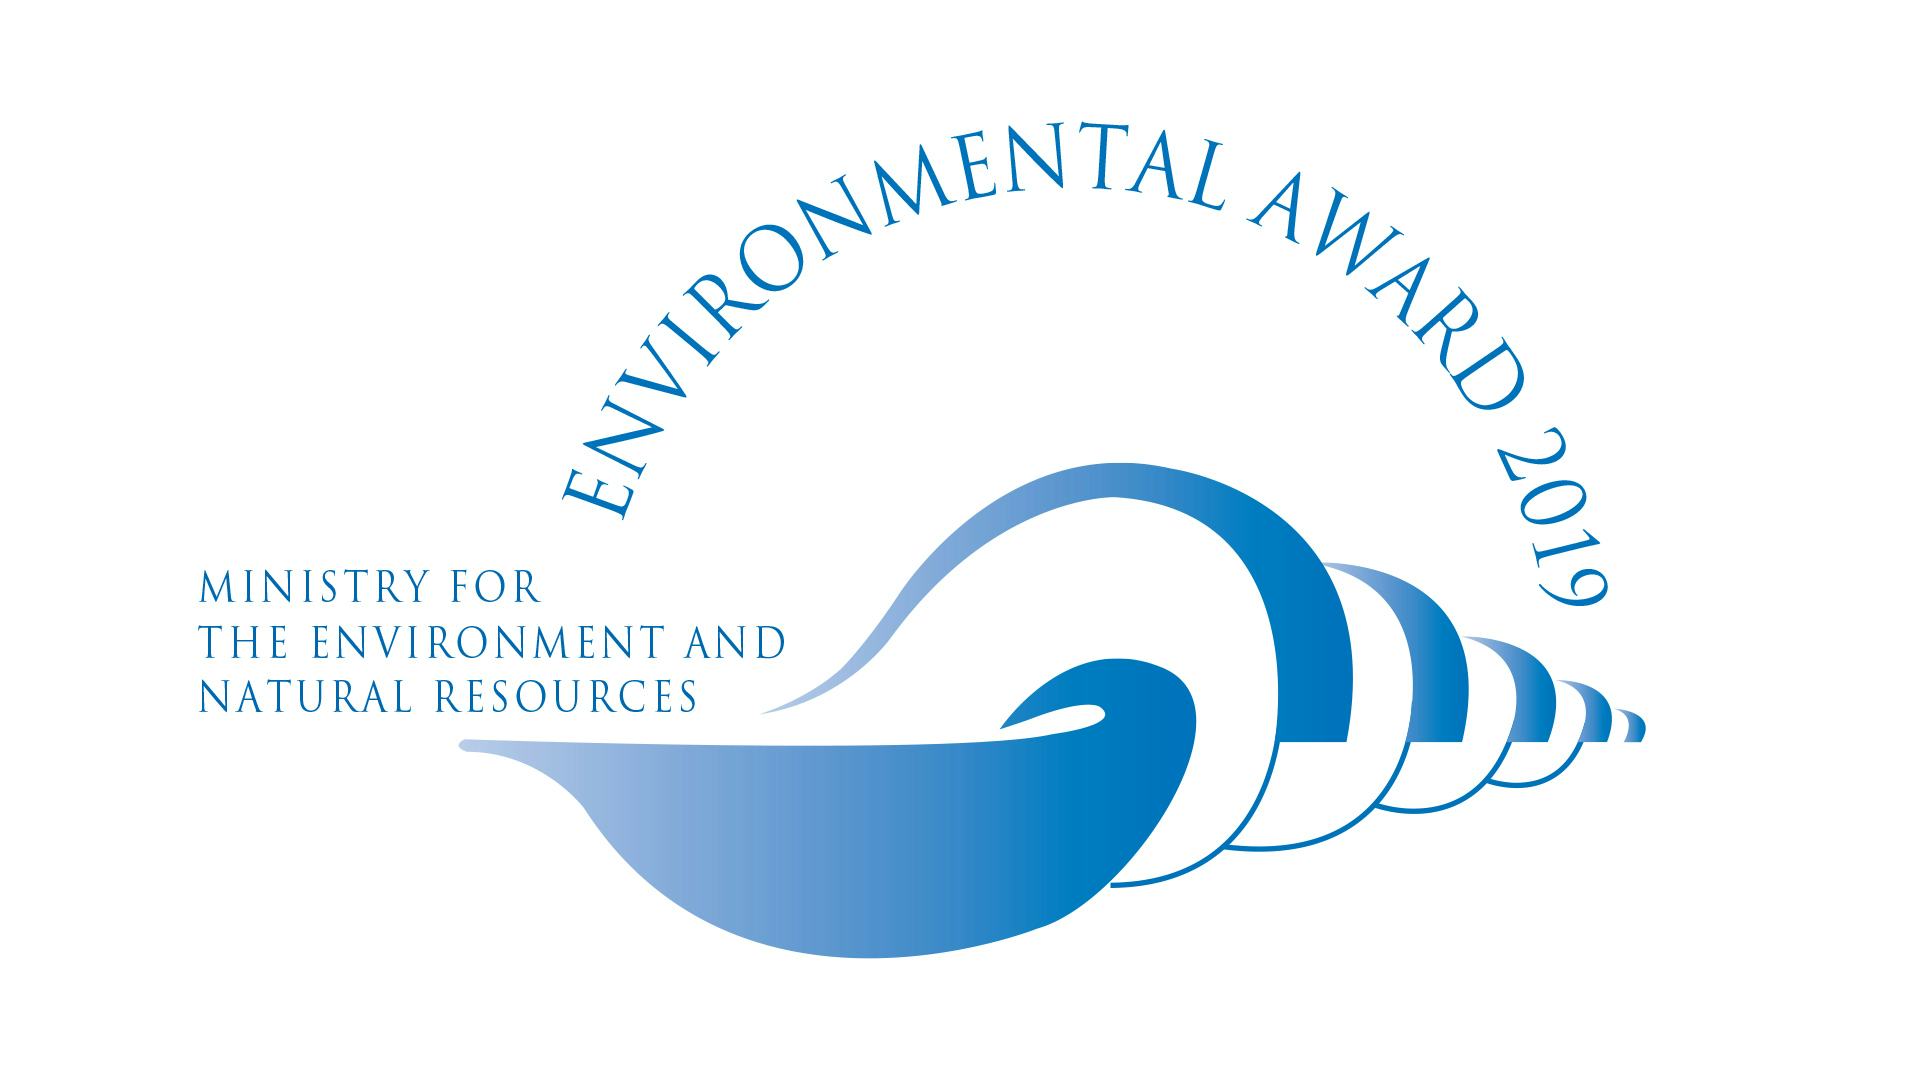 Environmental award 2019 text in the shape of sea shell